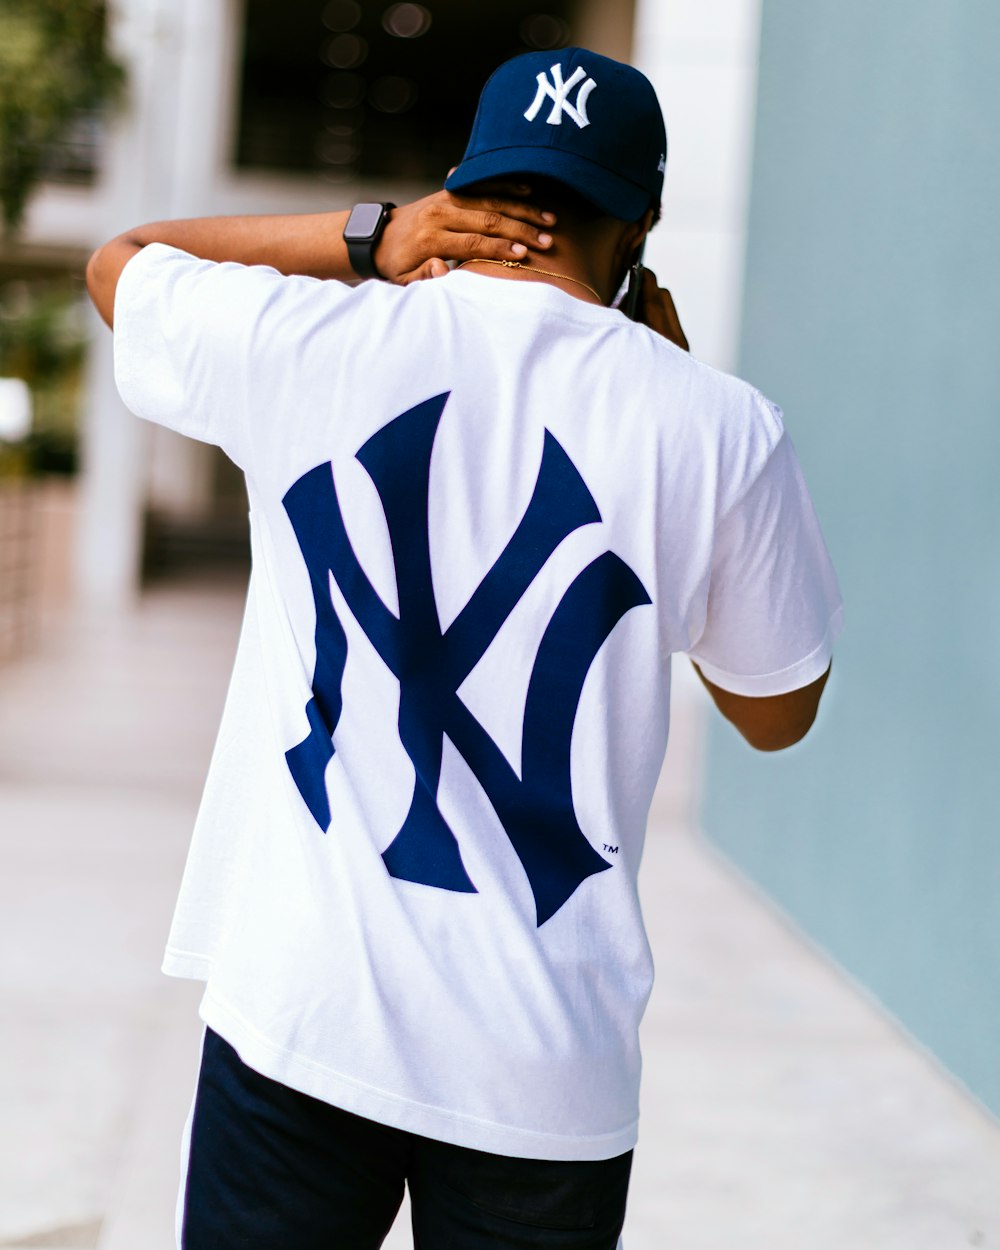 man wearing white and blue New York Yankees t-shirt walking while touching his neck